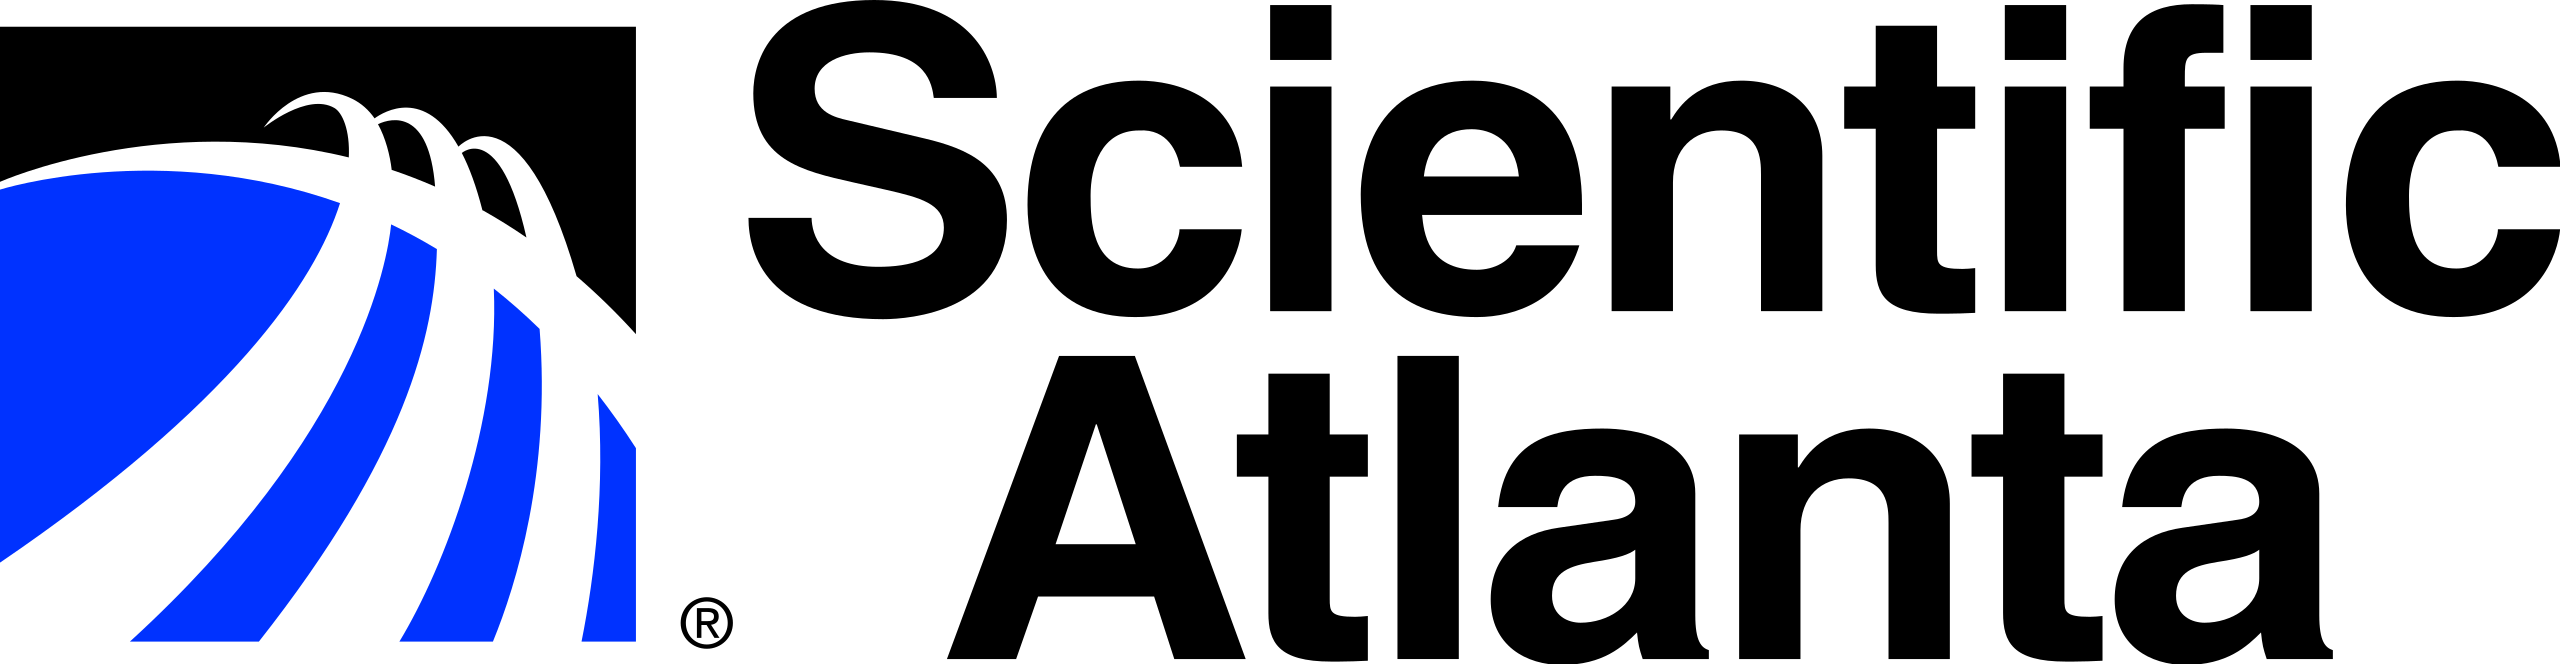 scientific atlanta logo